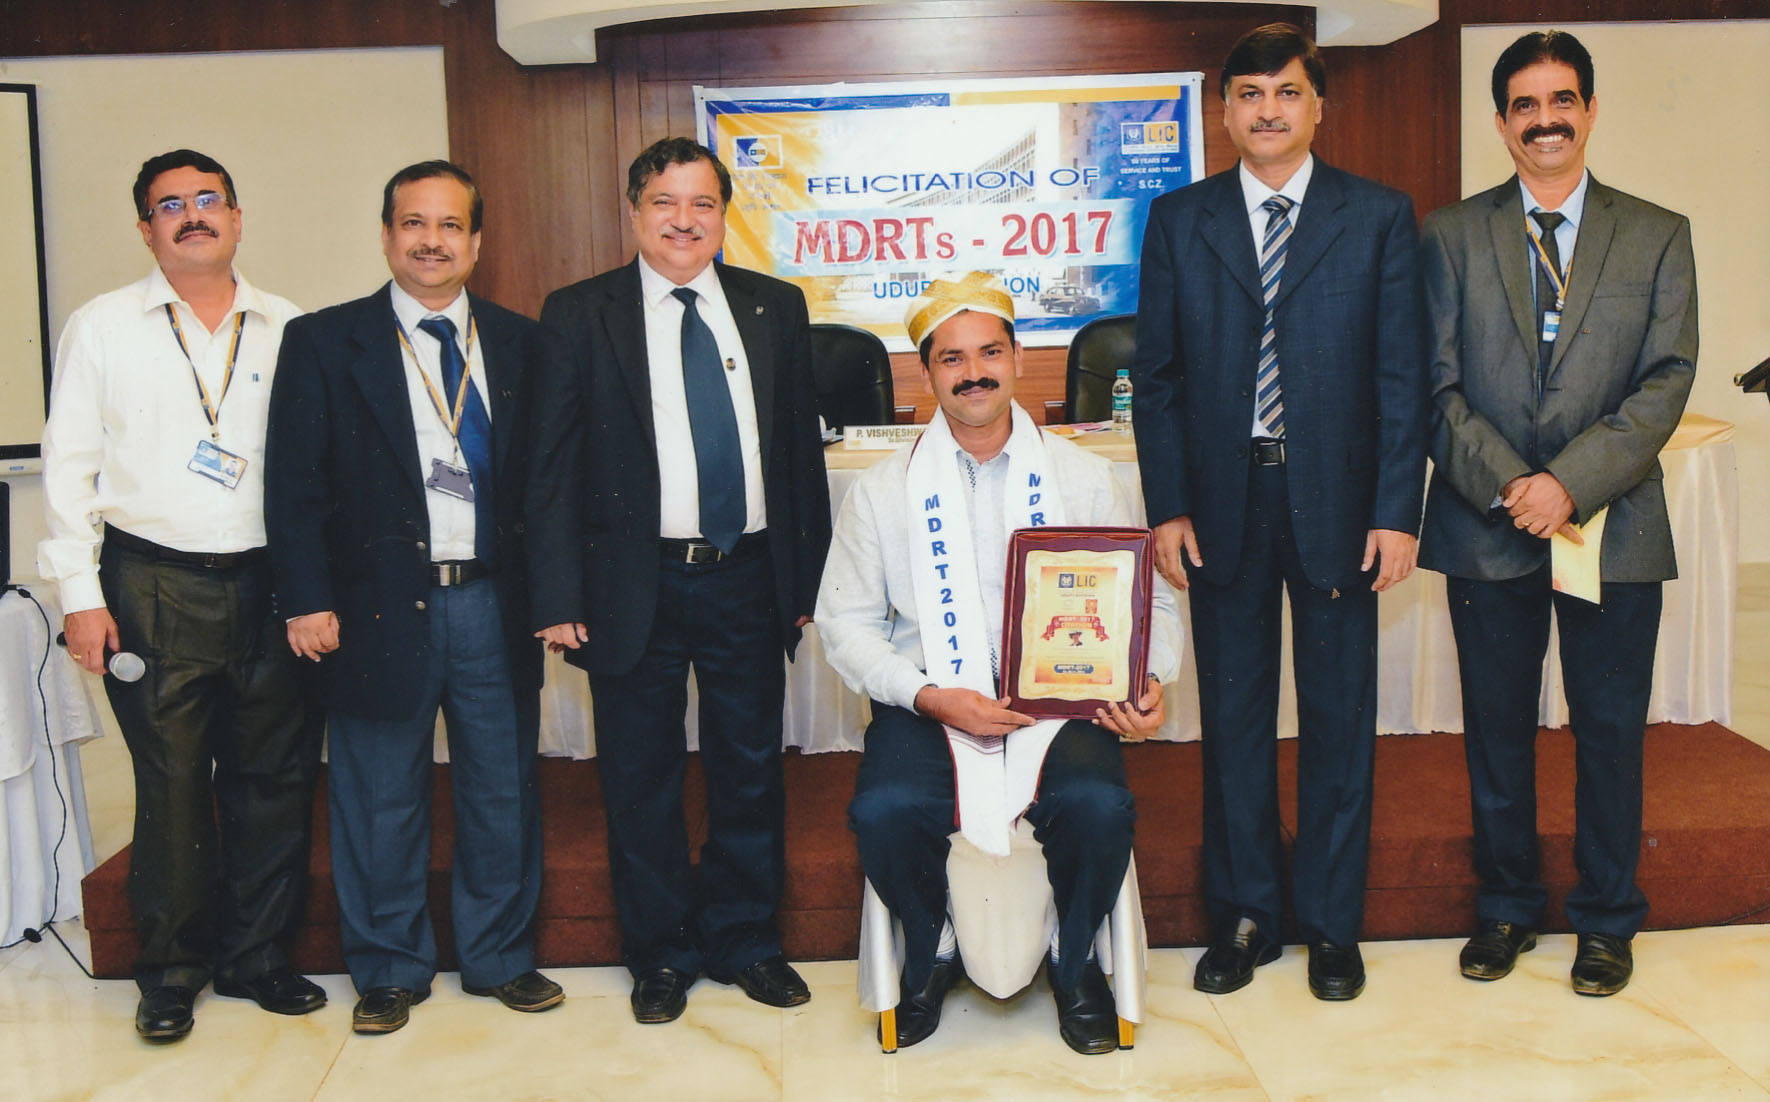 MDRT 2017 Honouring at Mangalore